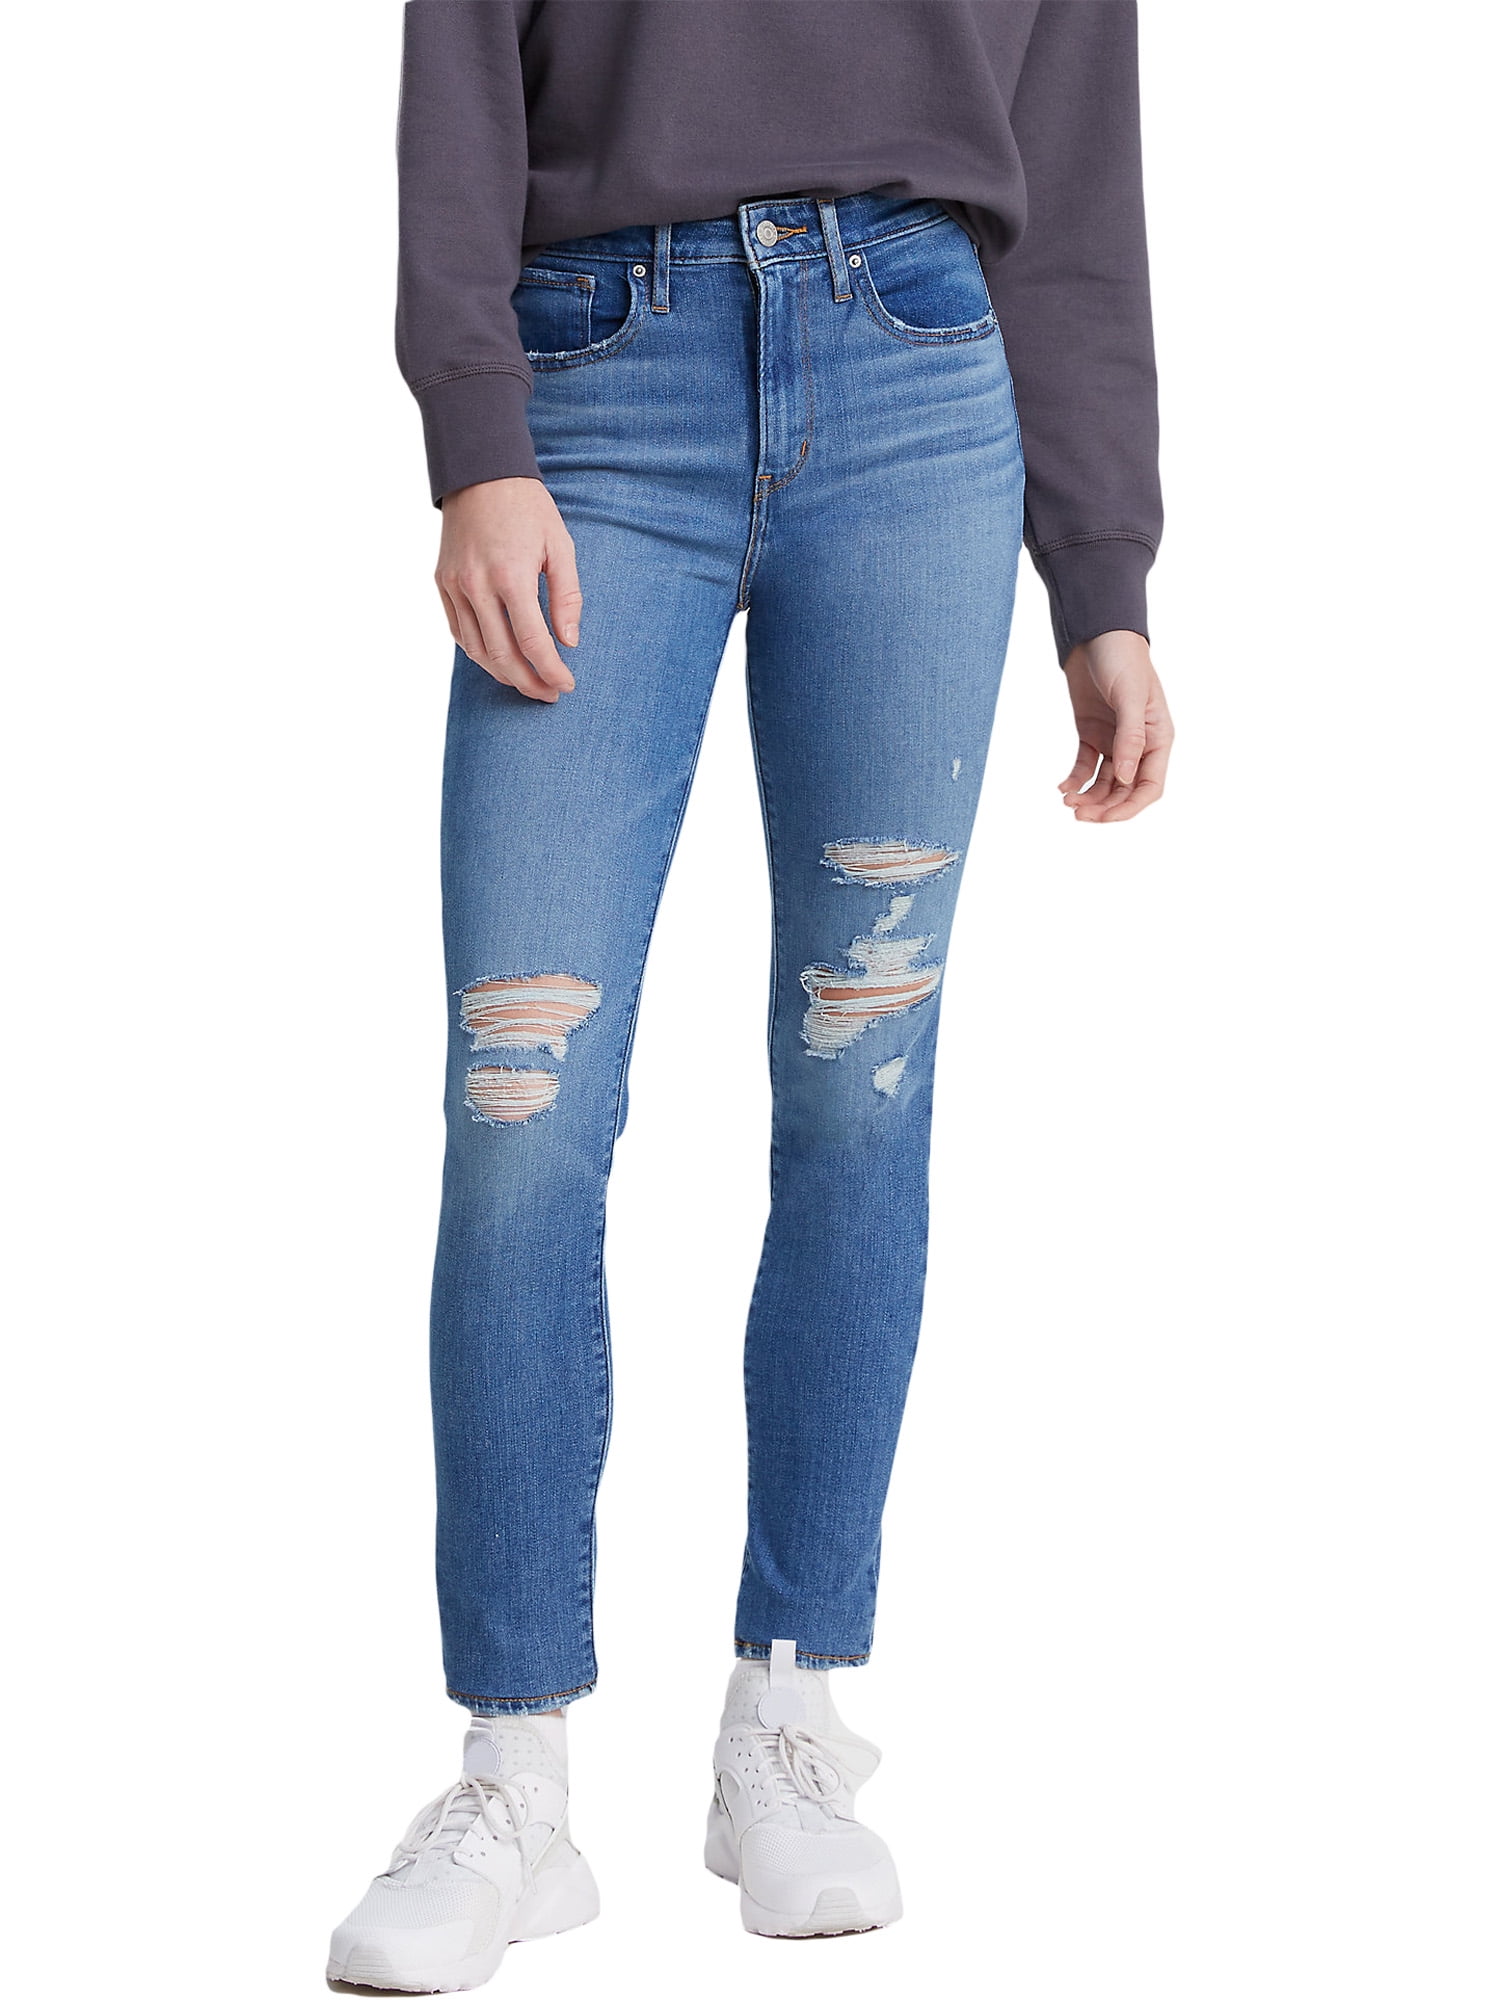 Levi's Original Women's 721 High-Rise Skinny Jeans 